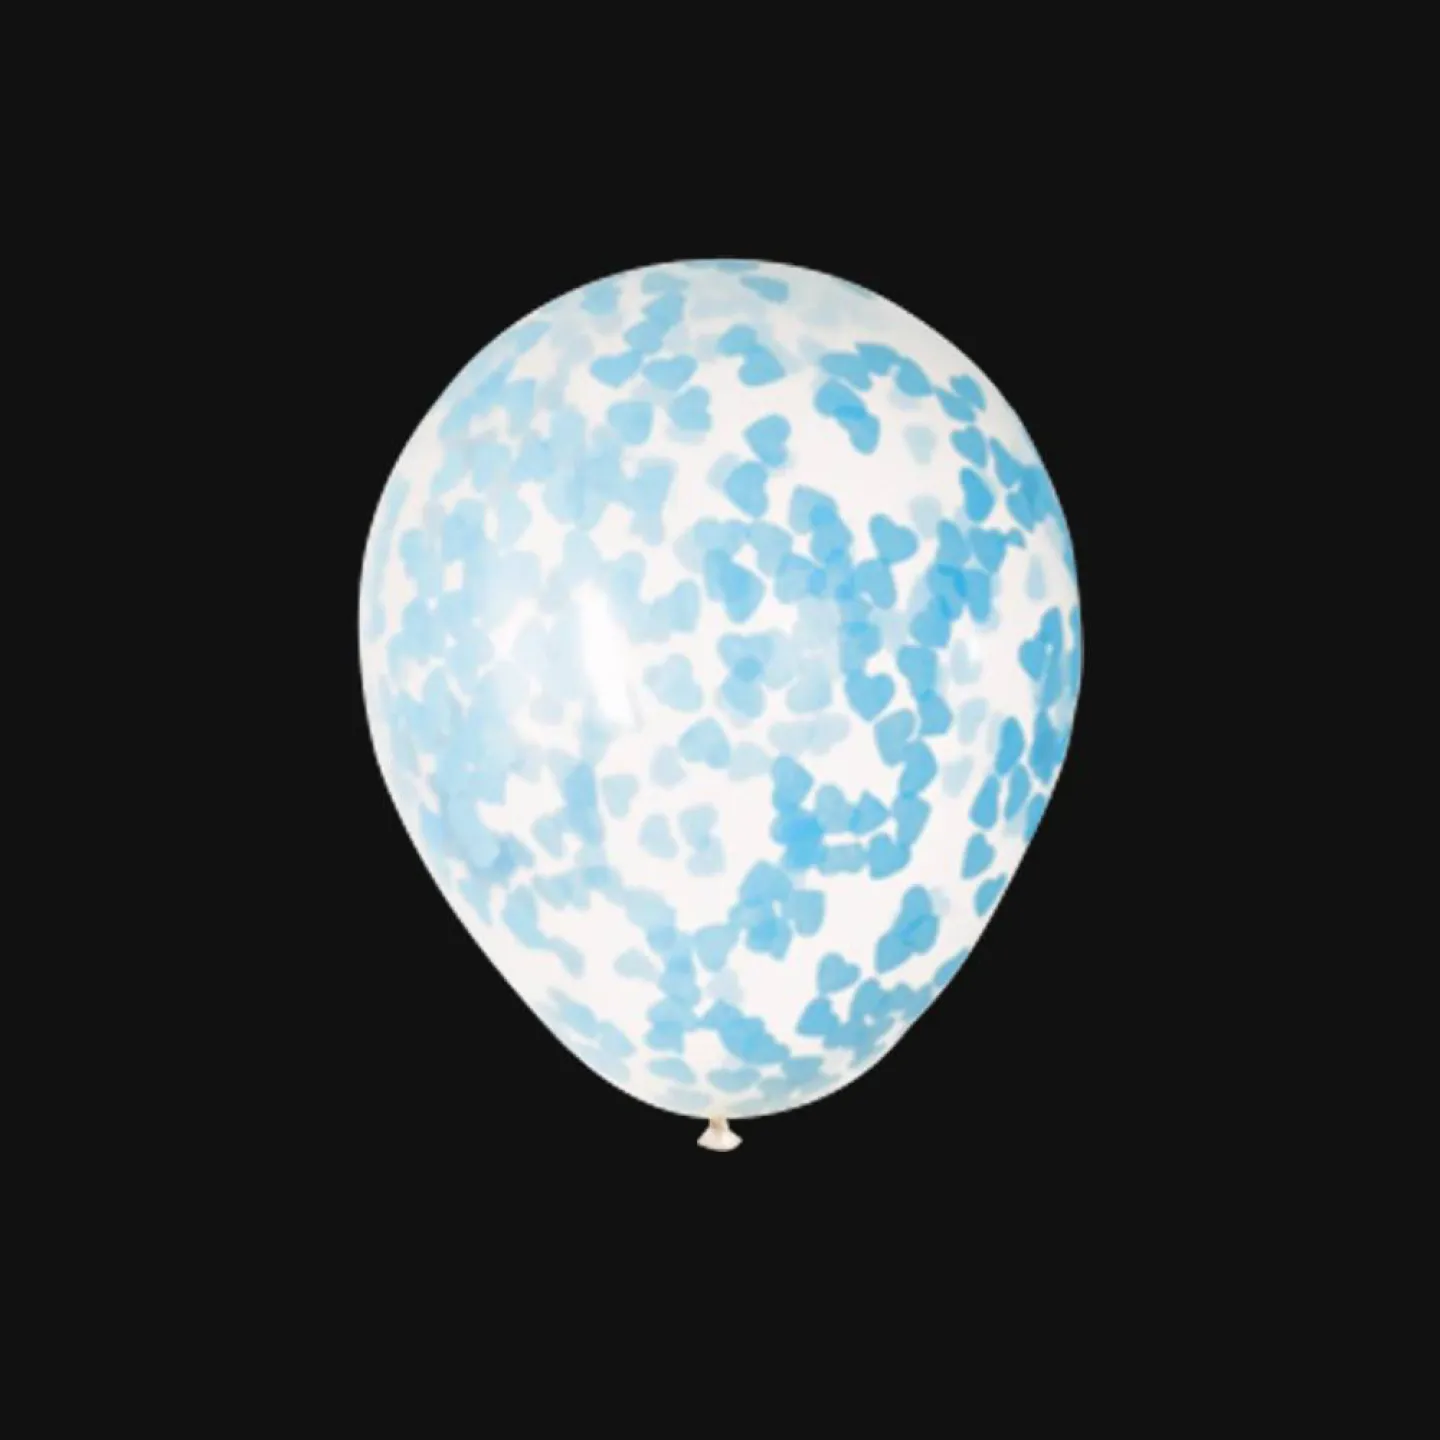 Confetti ballon blauwe hartjes.